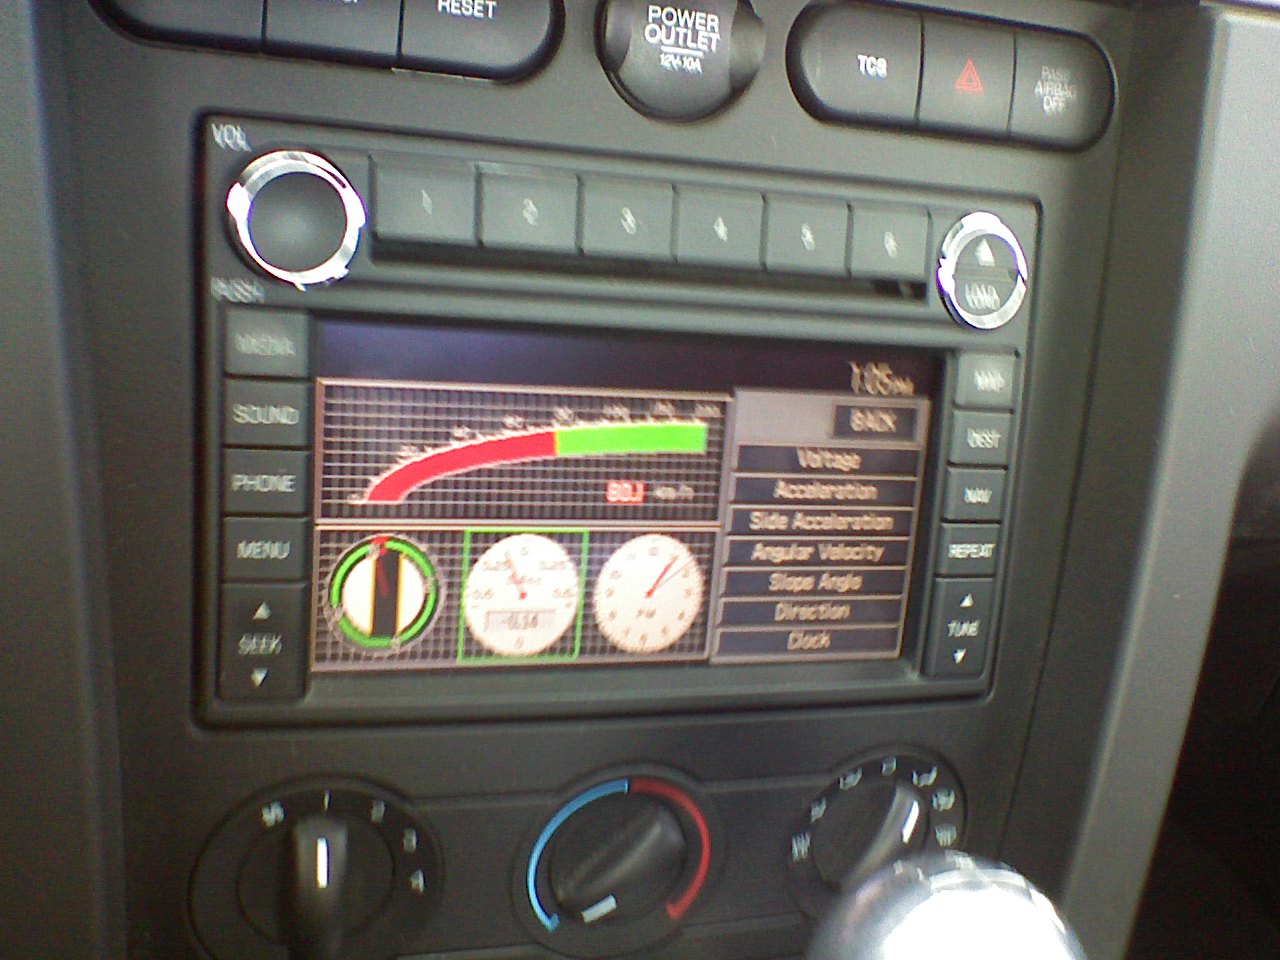 2007 mustang radio not working